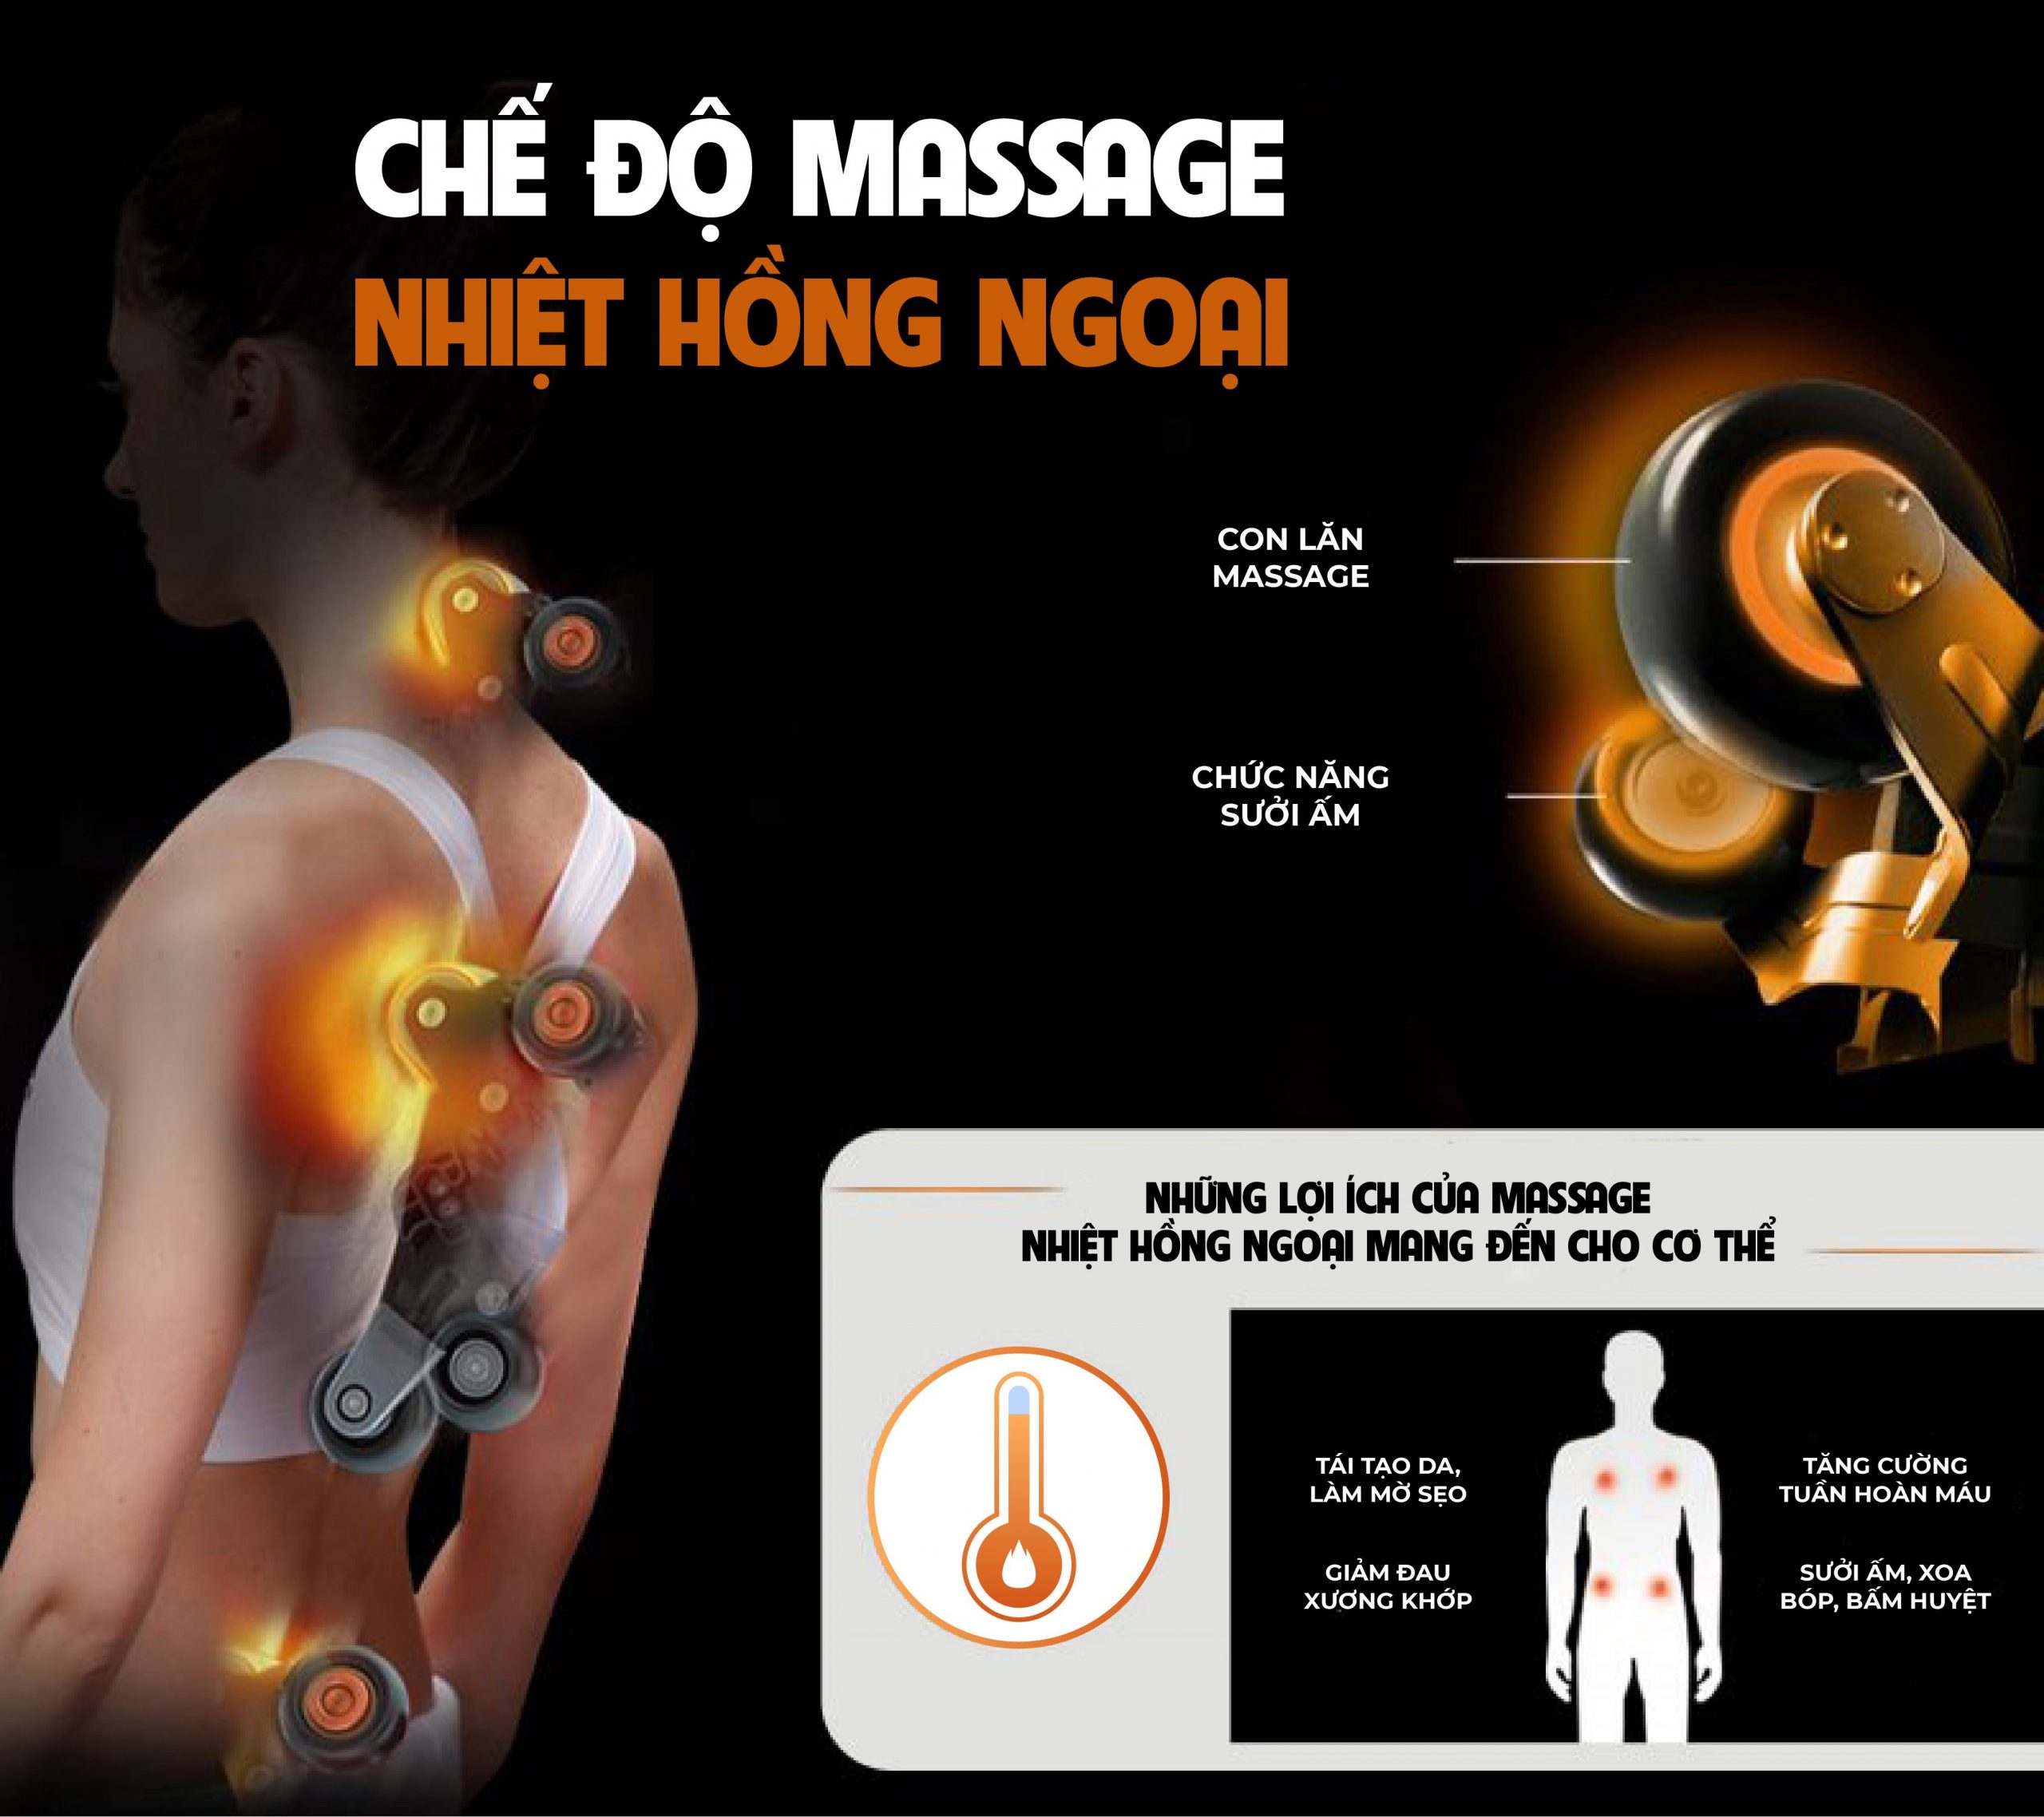 Ghế massage Washima WA-T888